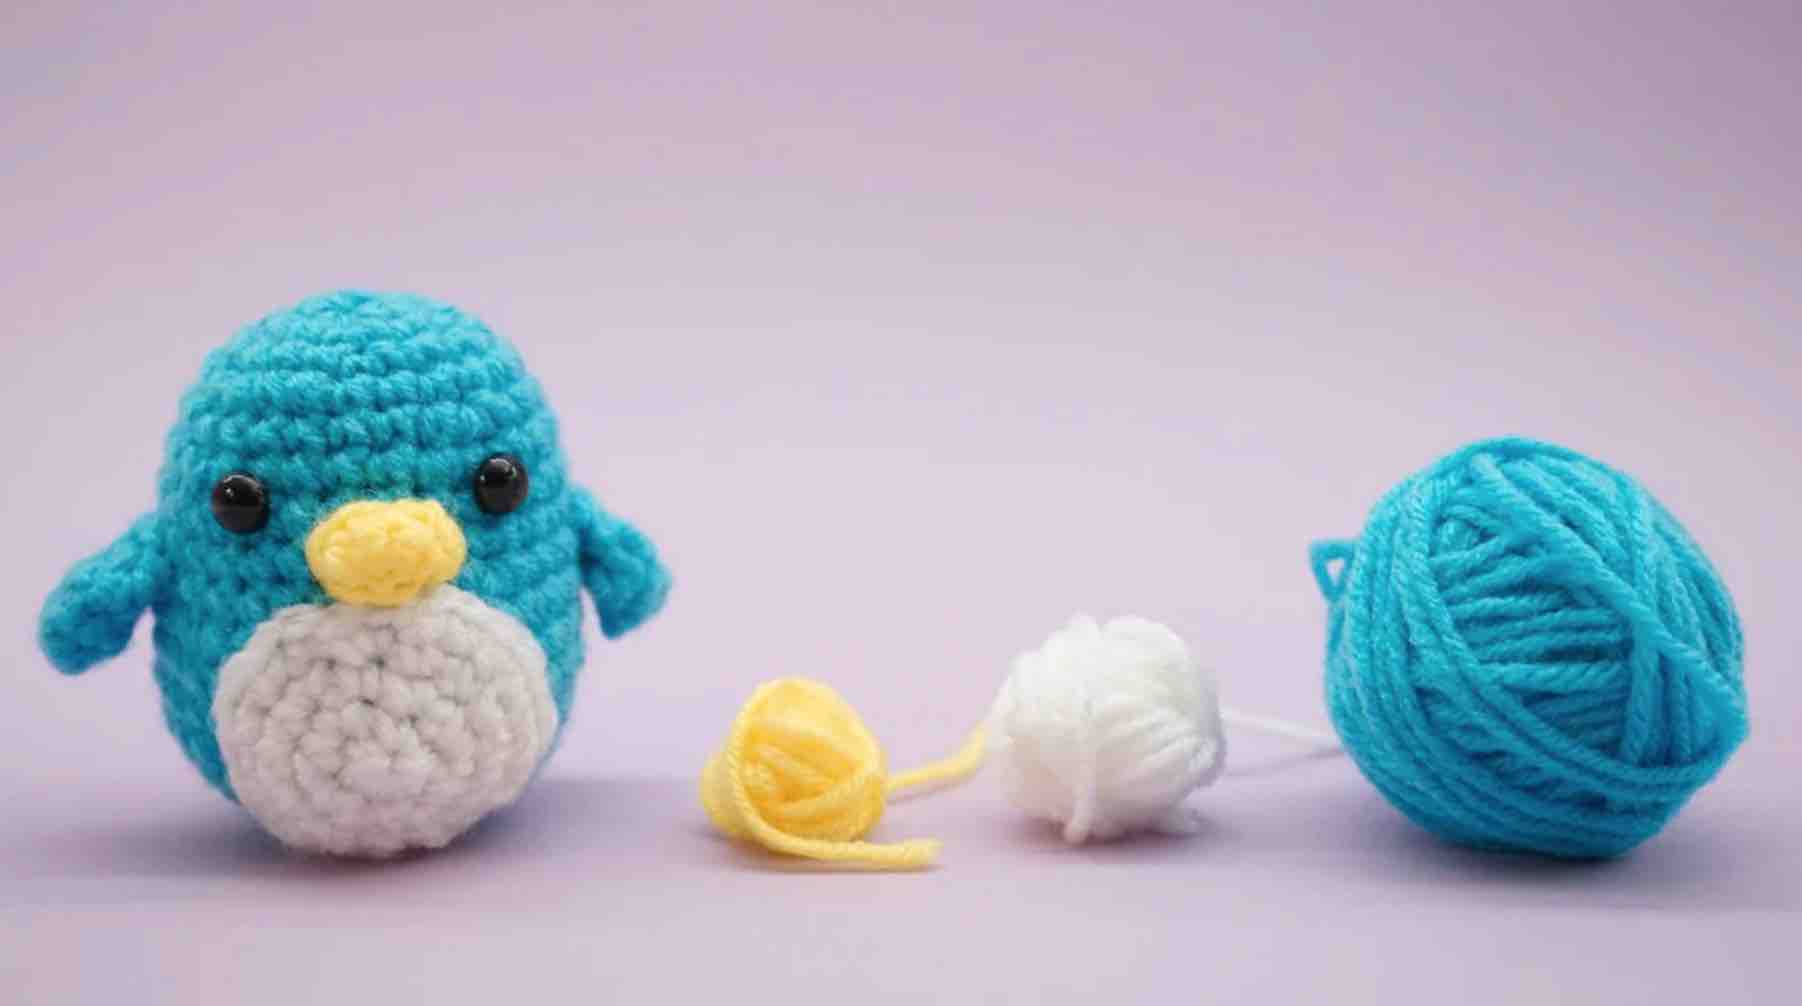 Pierre-The-Penguin-Crochet-Pattern-The-Woobles